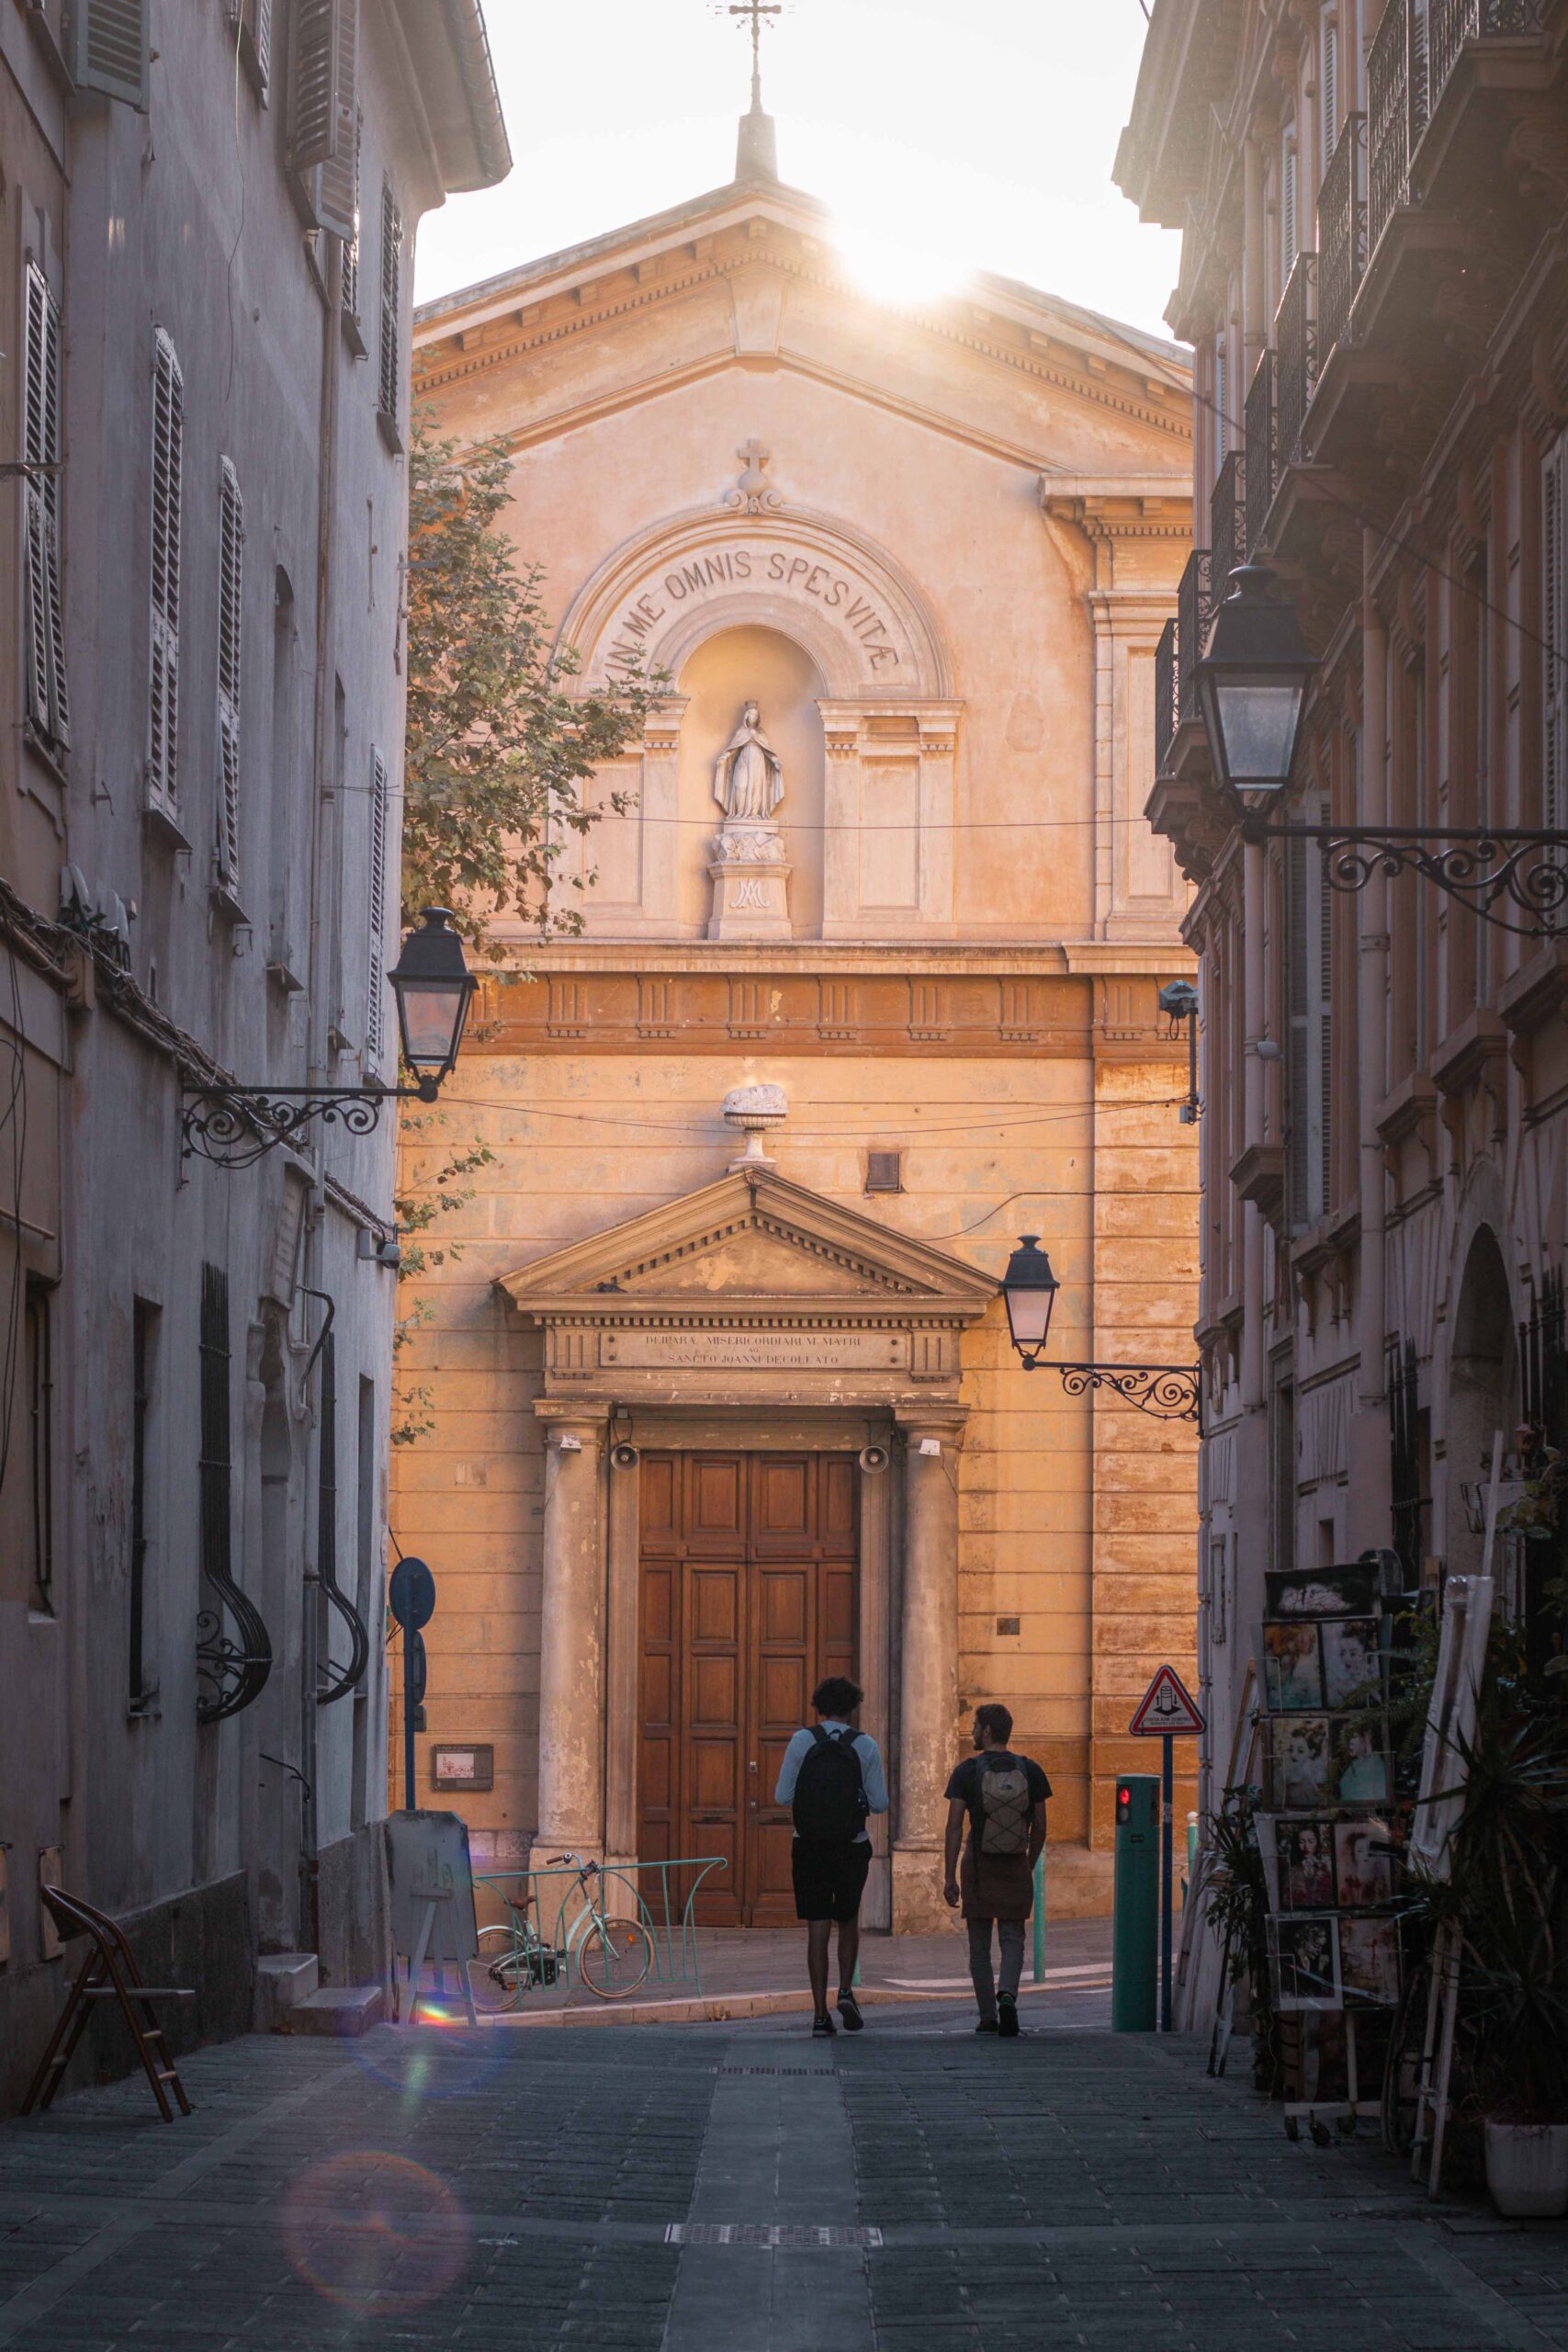 Two pedestrians walking in a street ("Rue de Bréa") towards the Chapelle de la Miséricorde in the Old Town of Menton, France